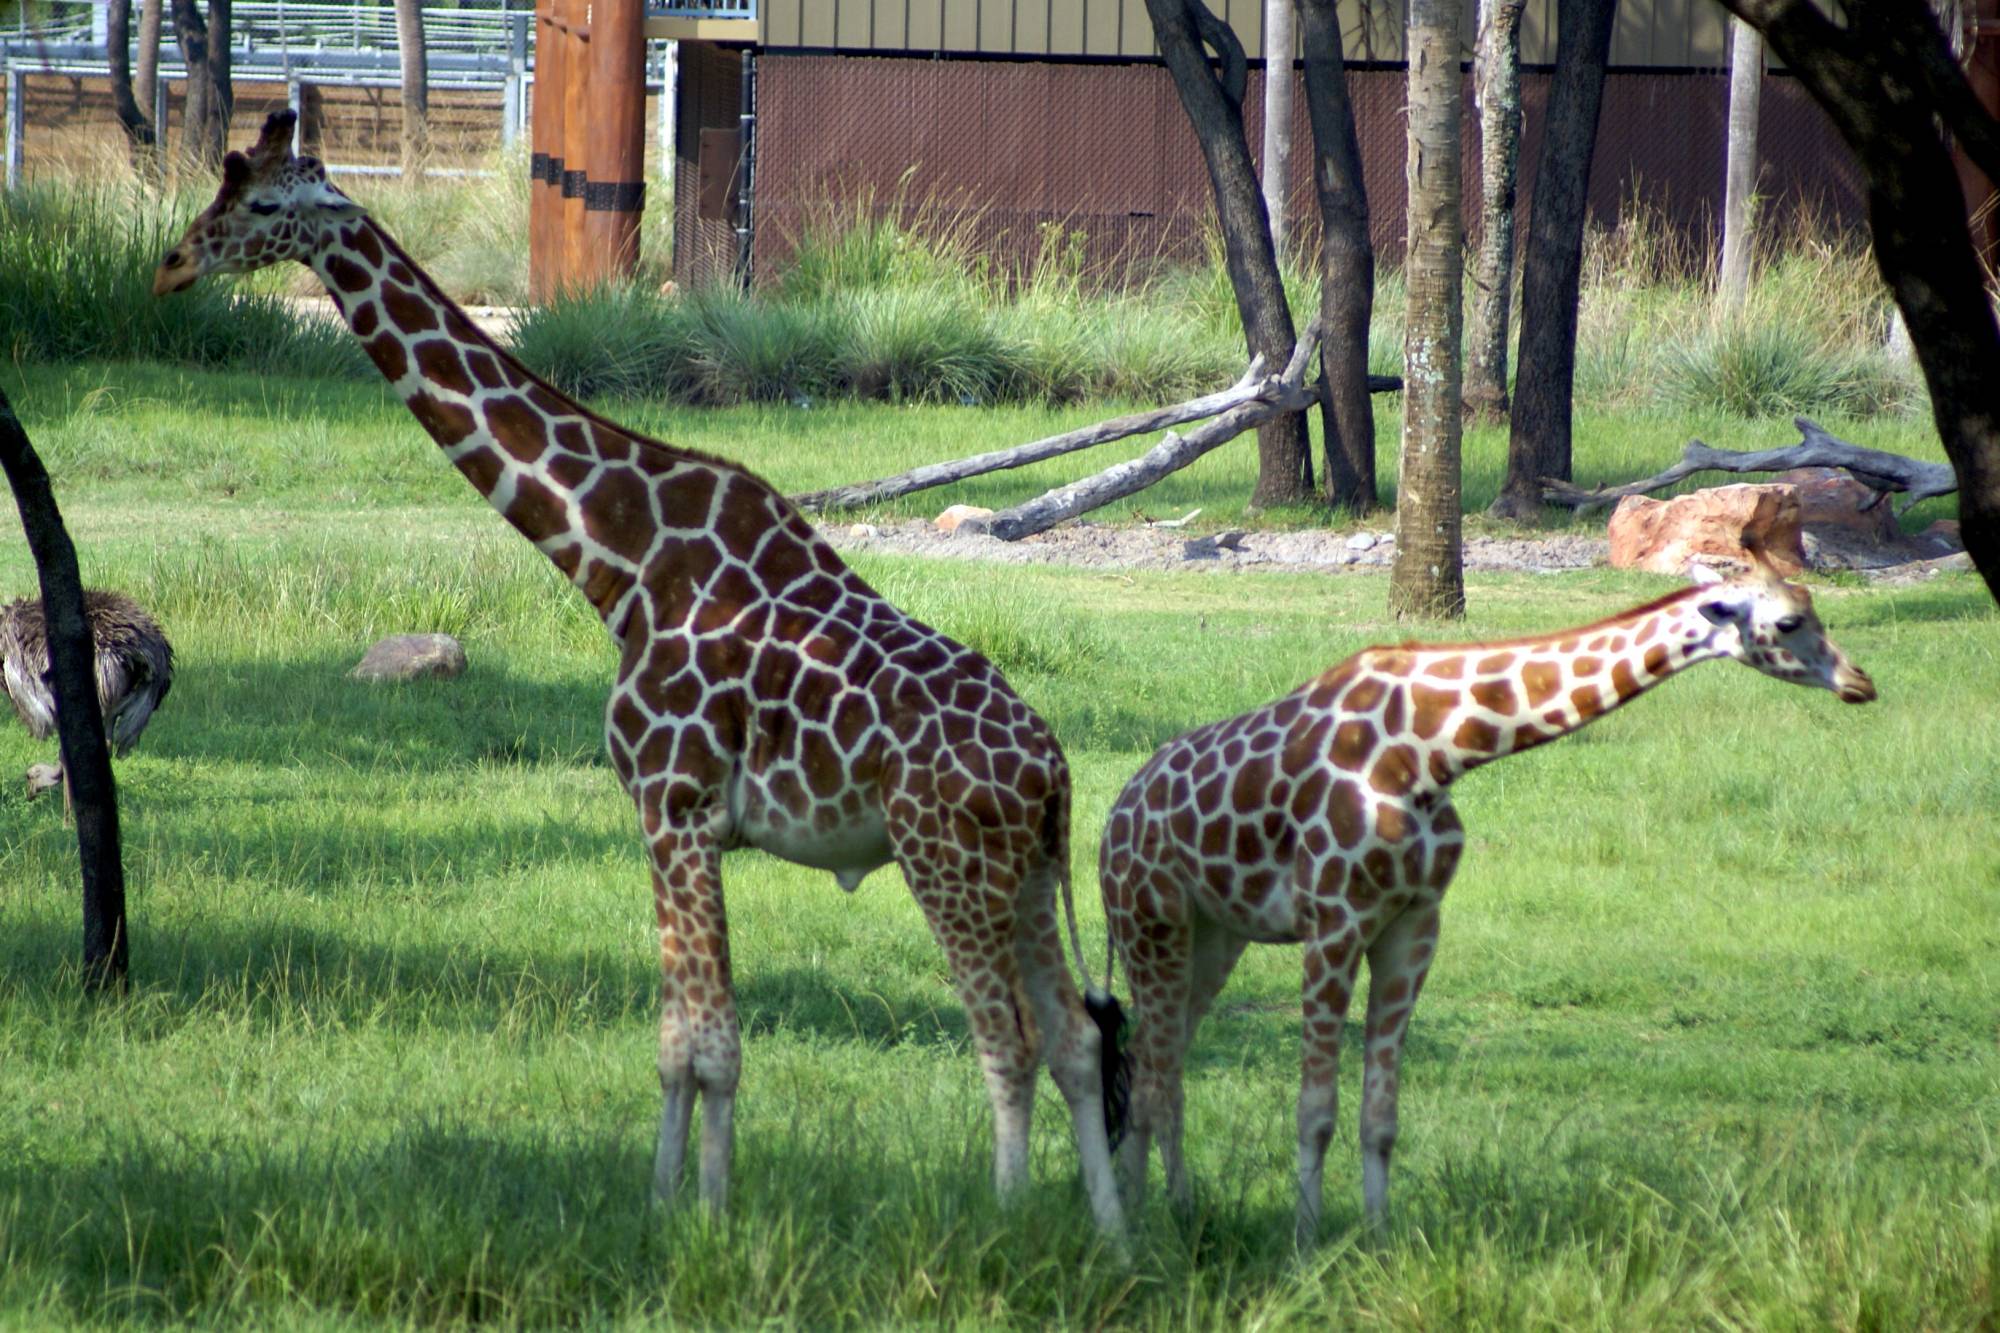 Savanna View of Two Giraffes